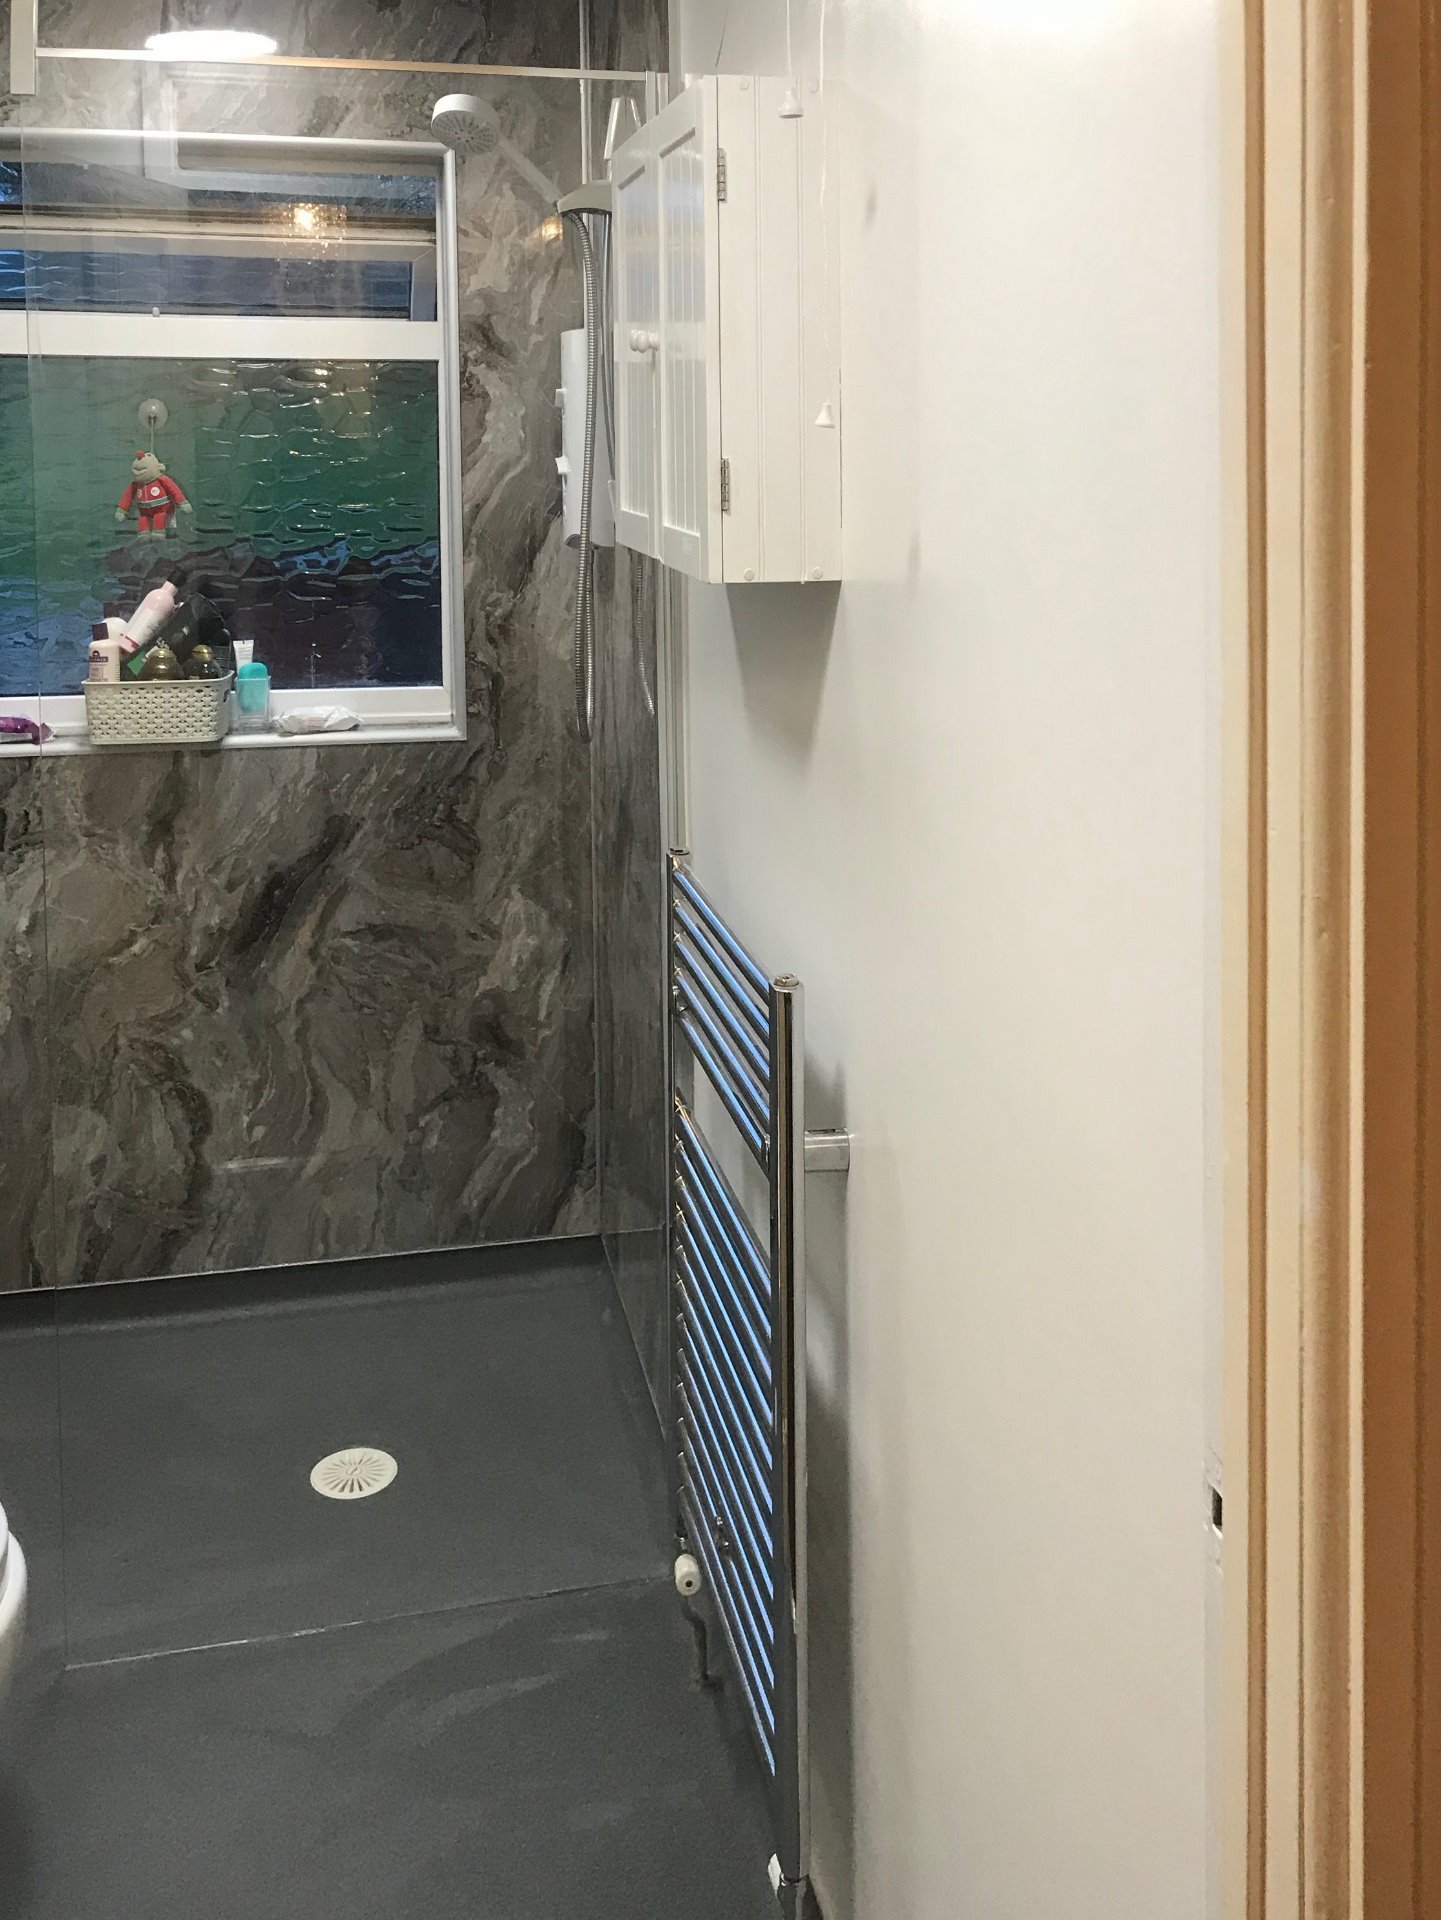 Bathroom to walk in shower room, chrome towel rail radiator. Barnstaple North Devon